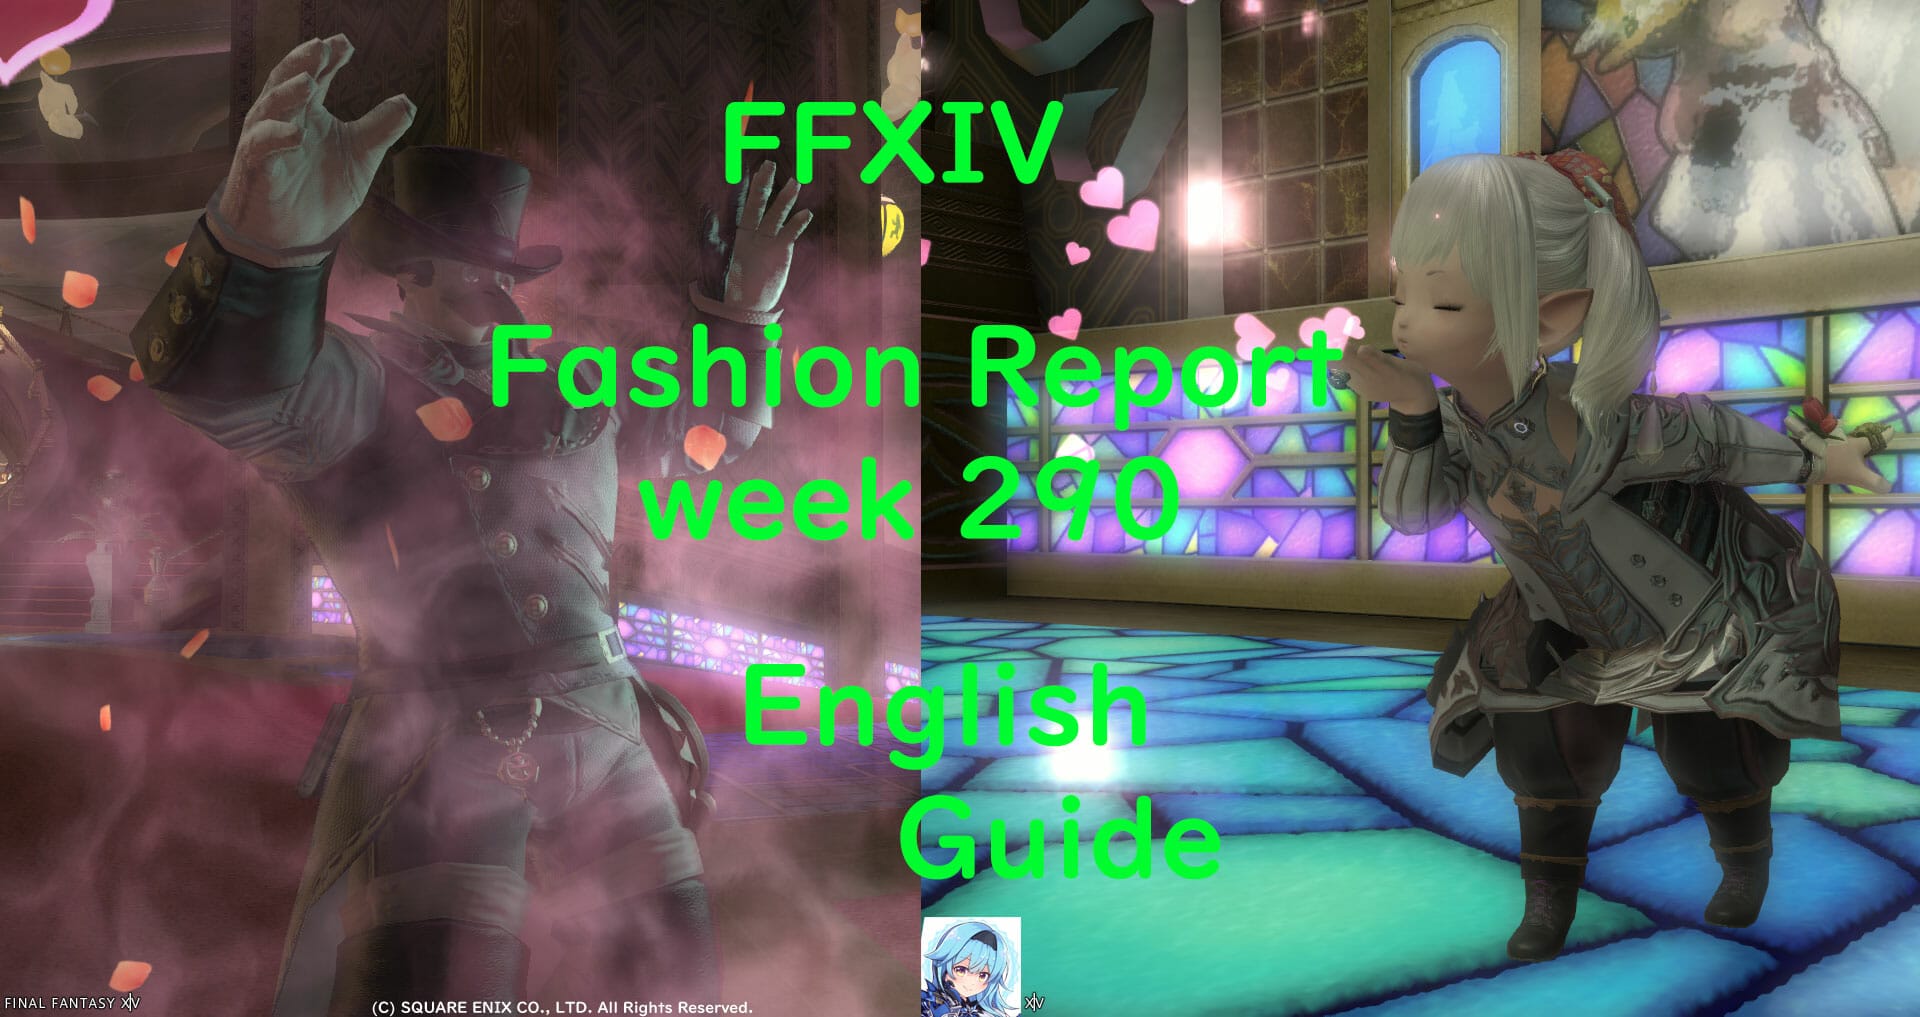 Fashion Report week 290